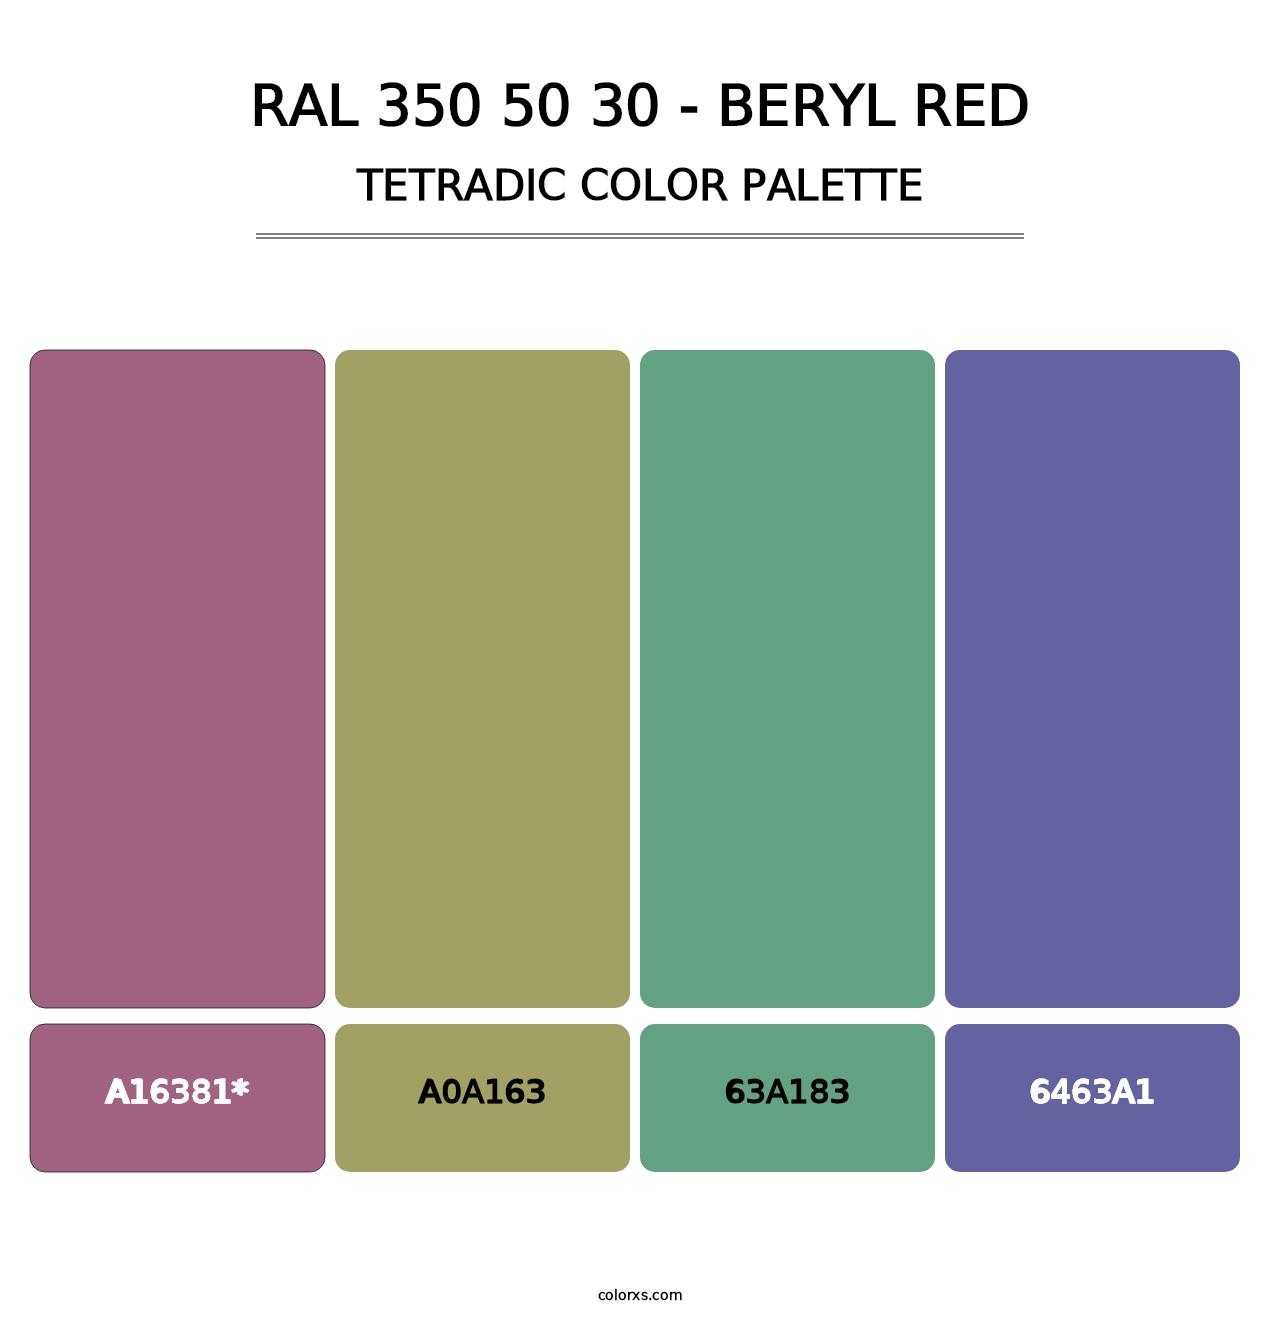 RAL 350 50 30 - Beryl Red - Tetradic Color Palette